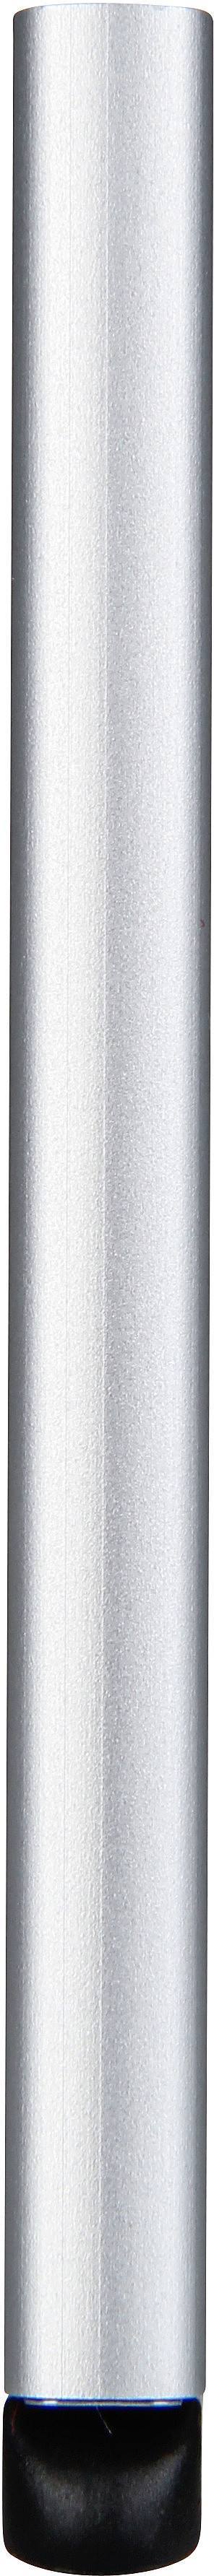 Secrid  Cardprotector - Kartenetui - Silber (Silver)